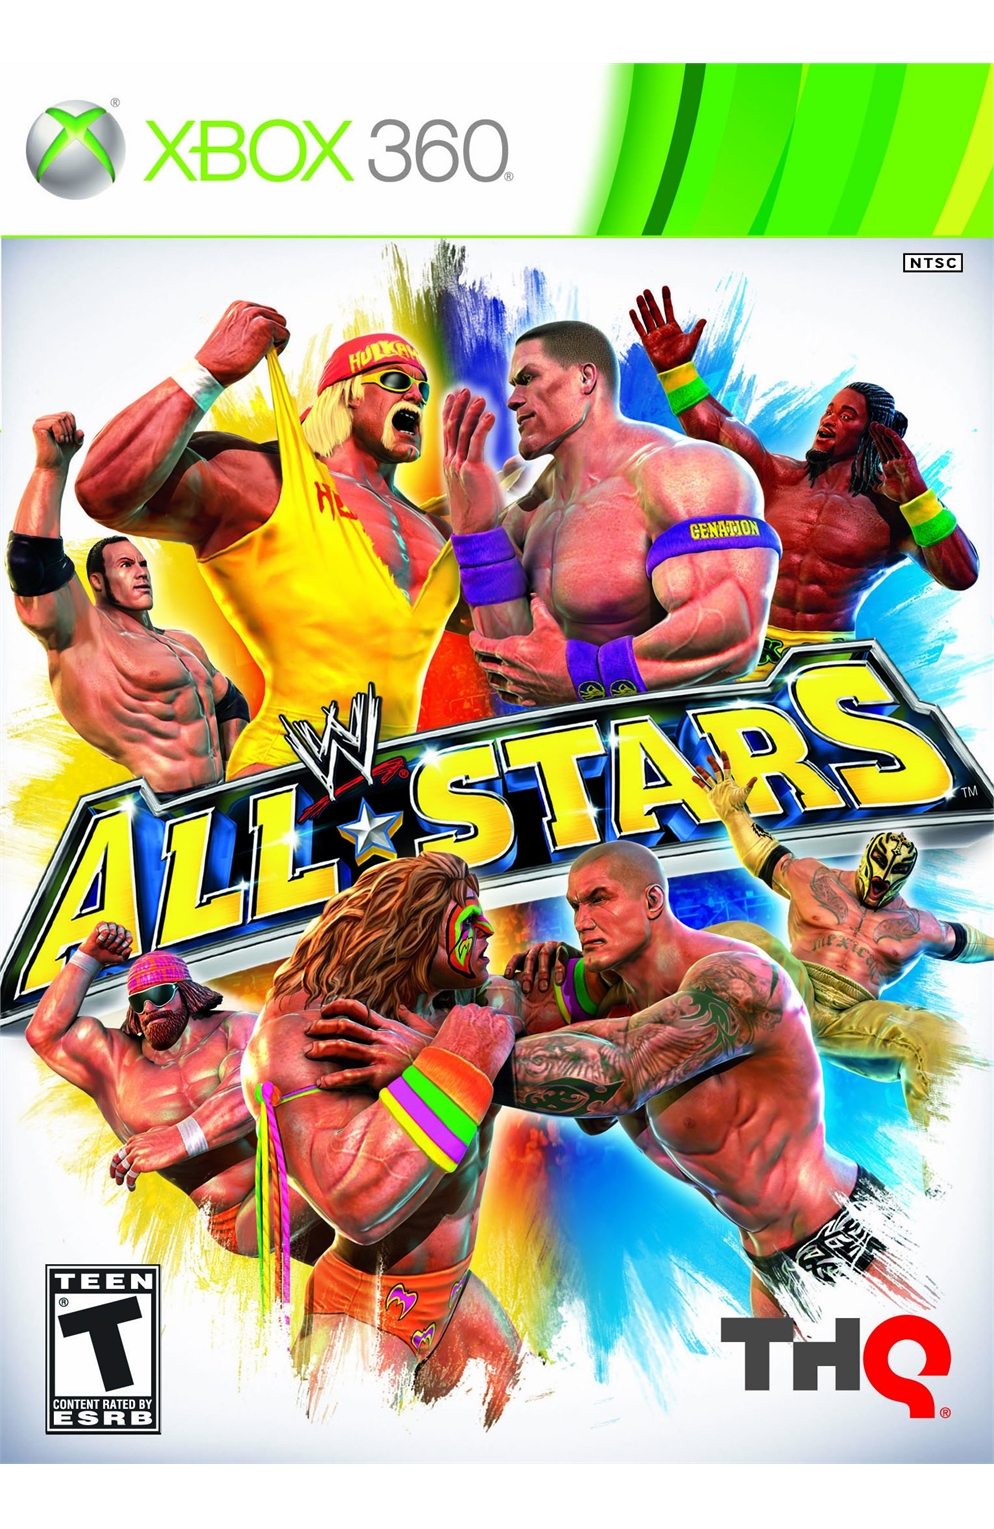 Xbox 360 Xb360 Wwe All Stars